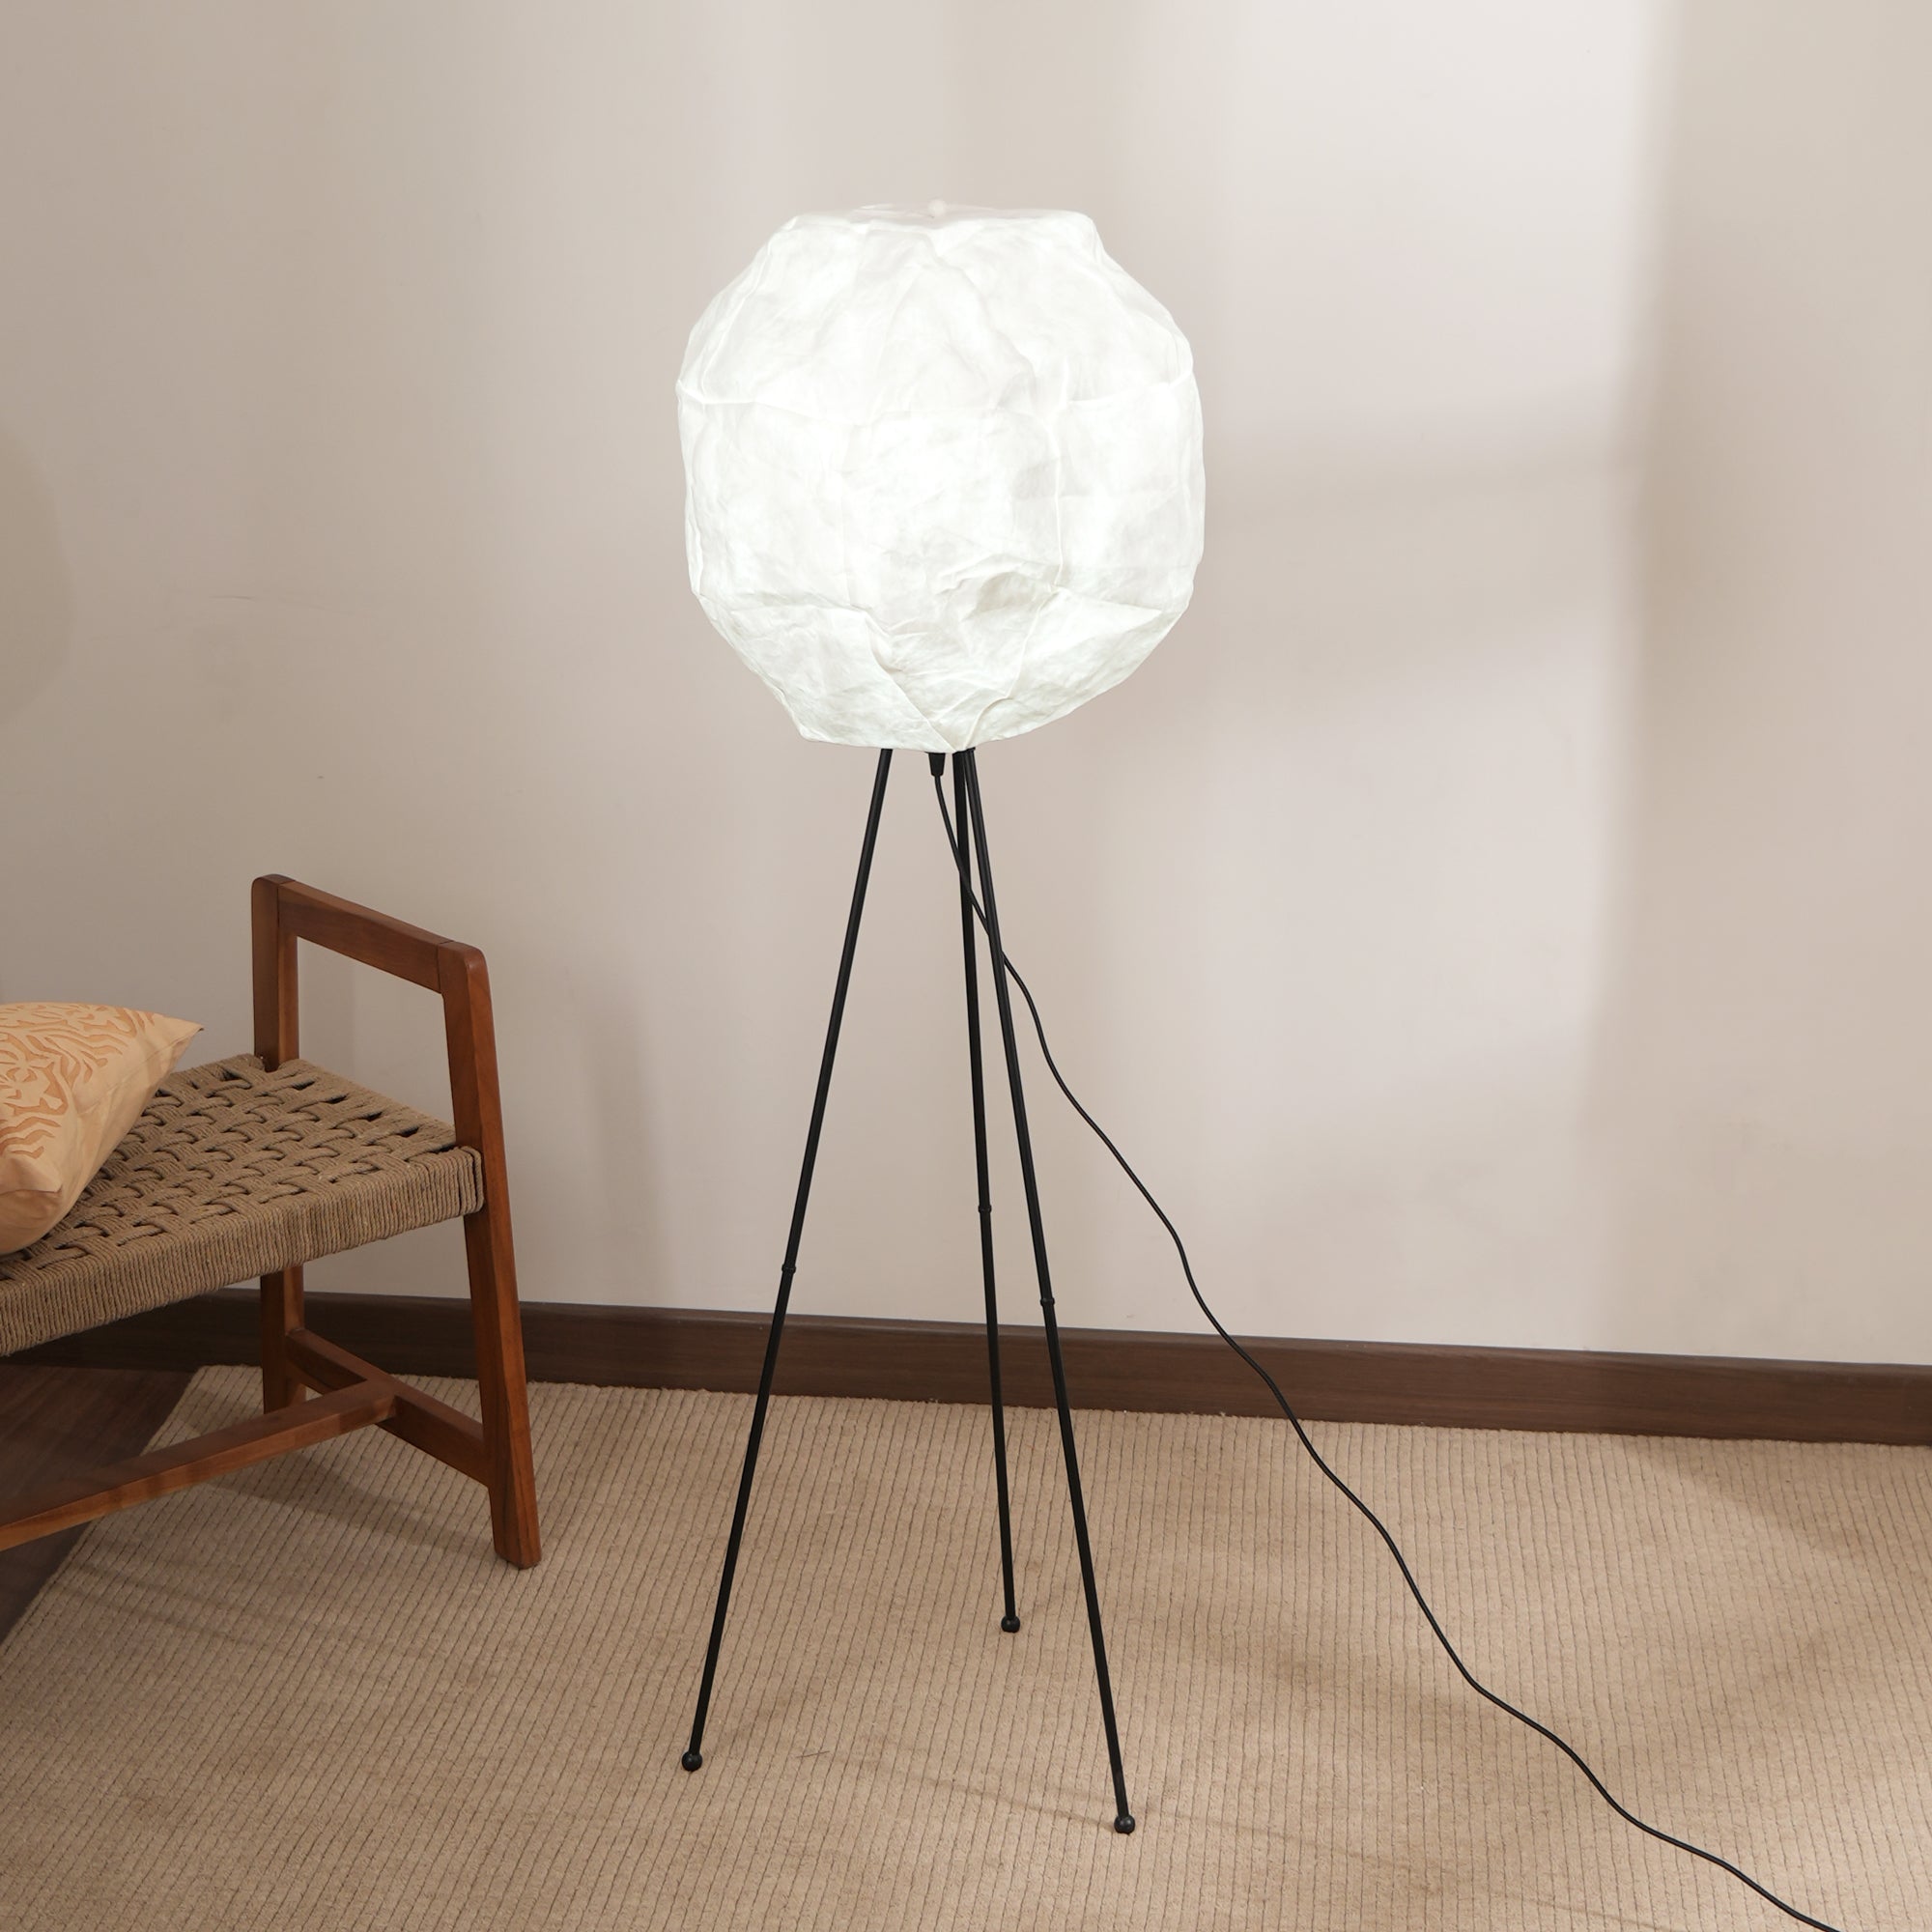 Luna Floor Lamp - Tripod Floor Lamp, Innovative Handcrafted Design, Recycled Polyethylene and Metal